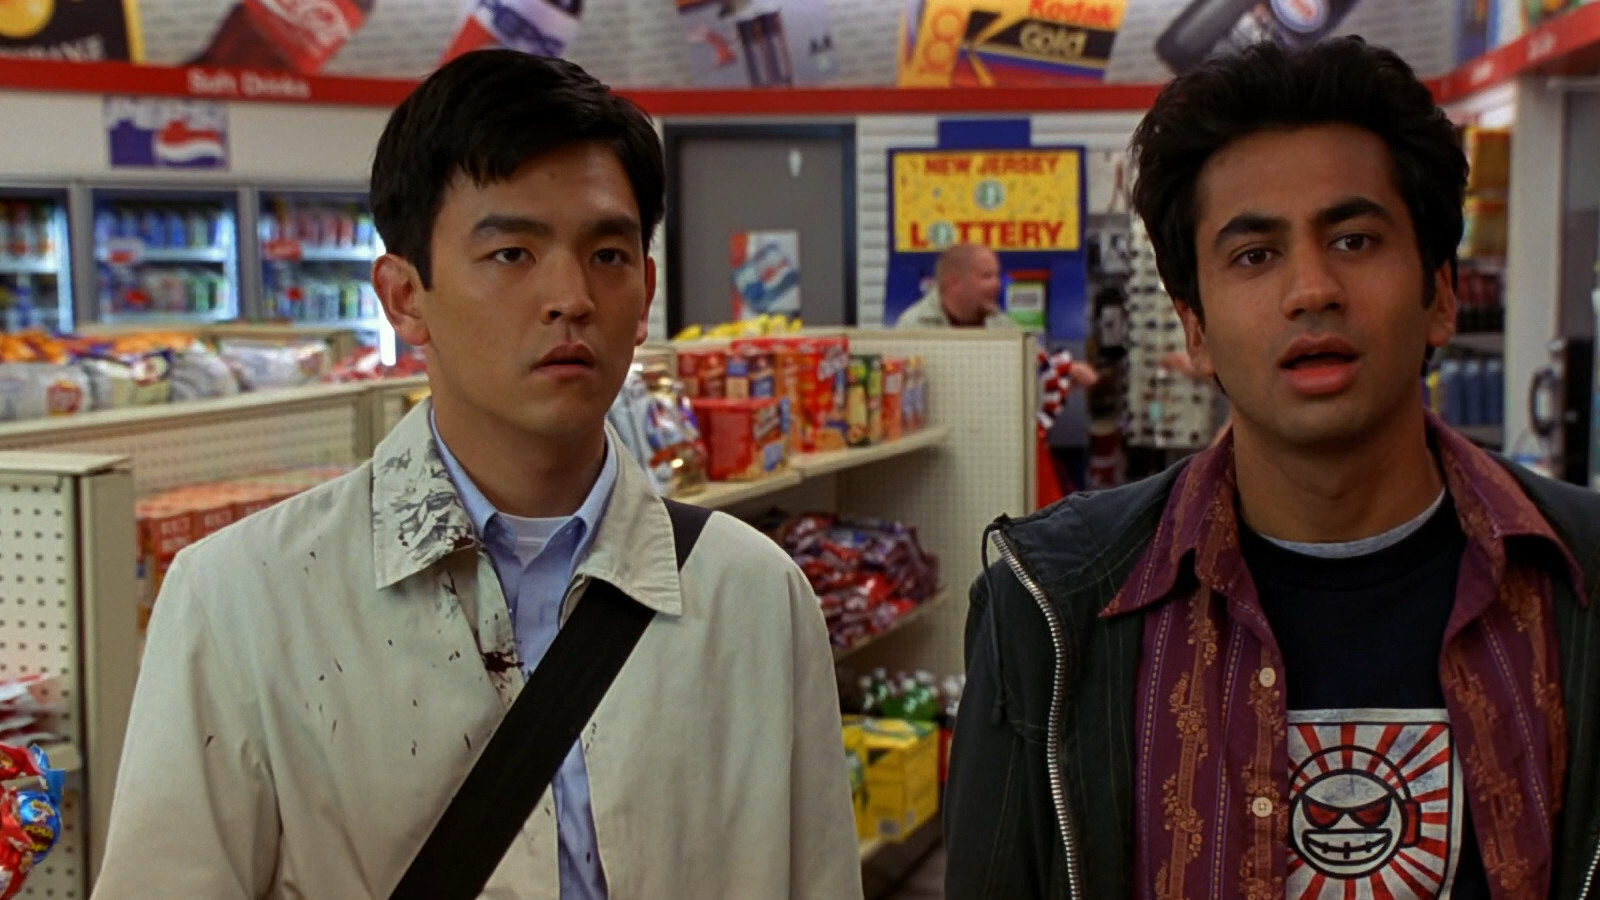 Harold & Kumar stars John Cho and Kal Penn